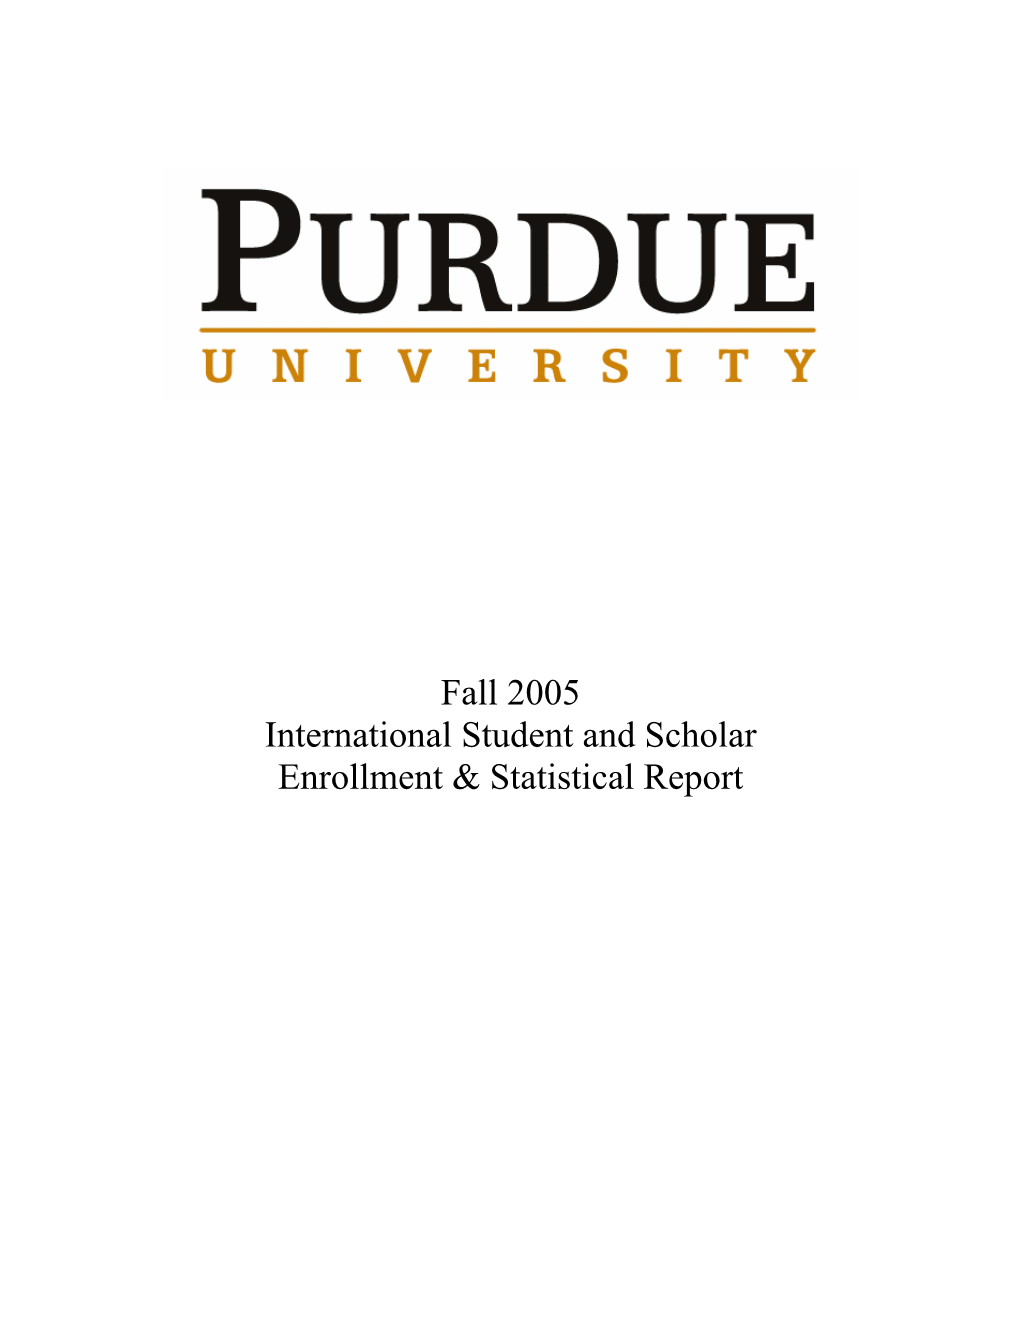 Fall 2005 International Student and Scholar Enrollment & Statistical